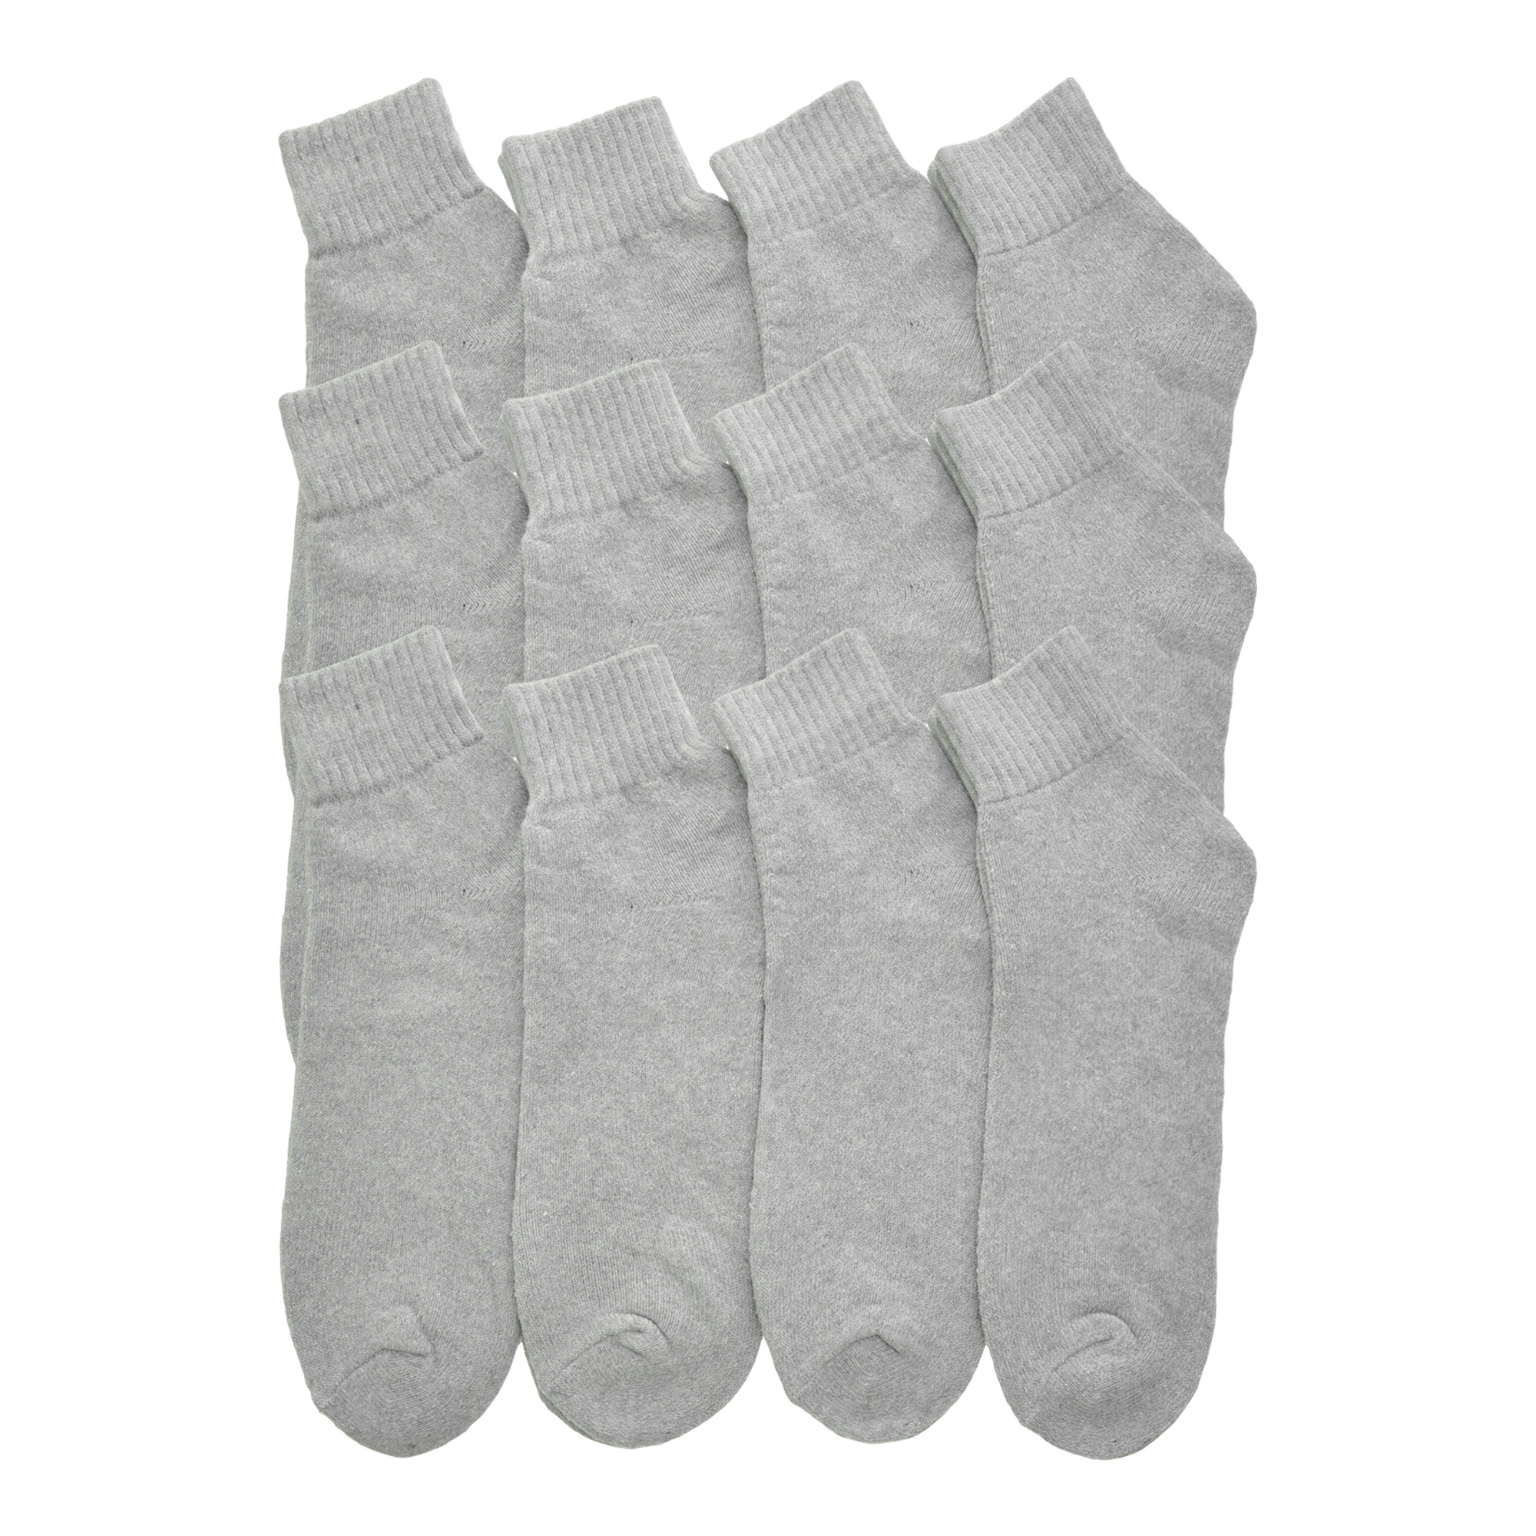 Wholesale Gray Cotton Blend Ankle Socks - Size L / XL(240x$0.59)